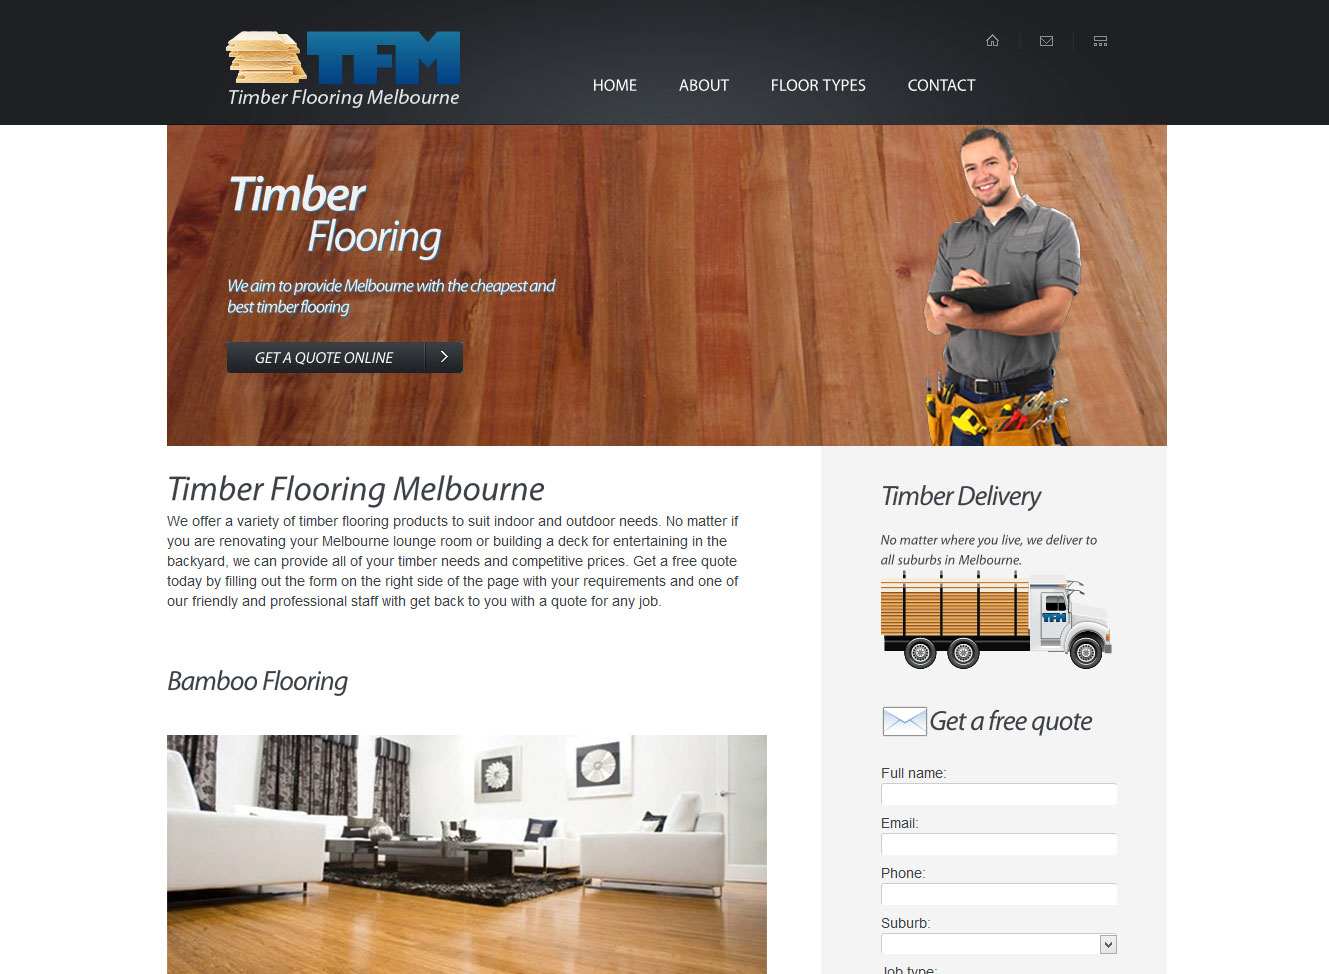 Timber Flooring Melbourne (try2dream)